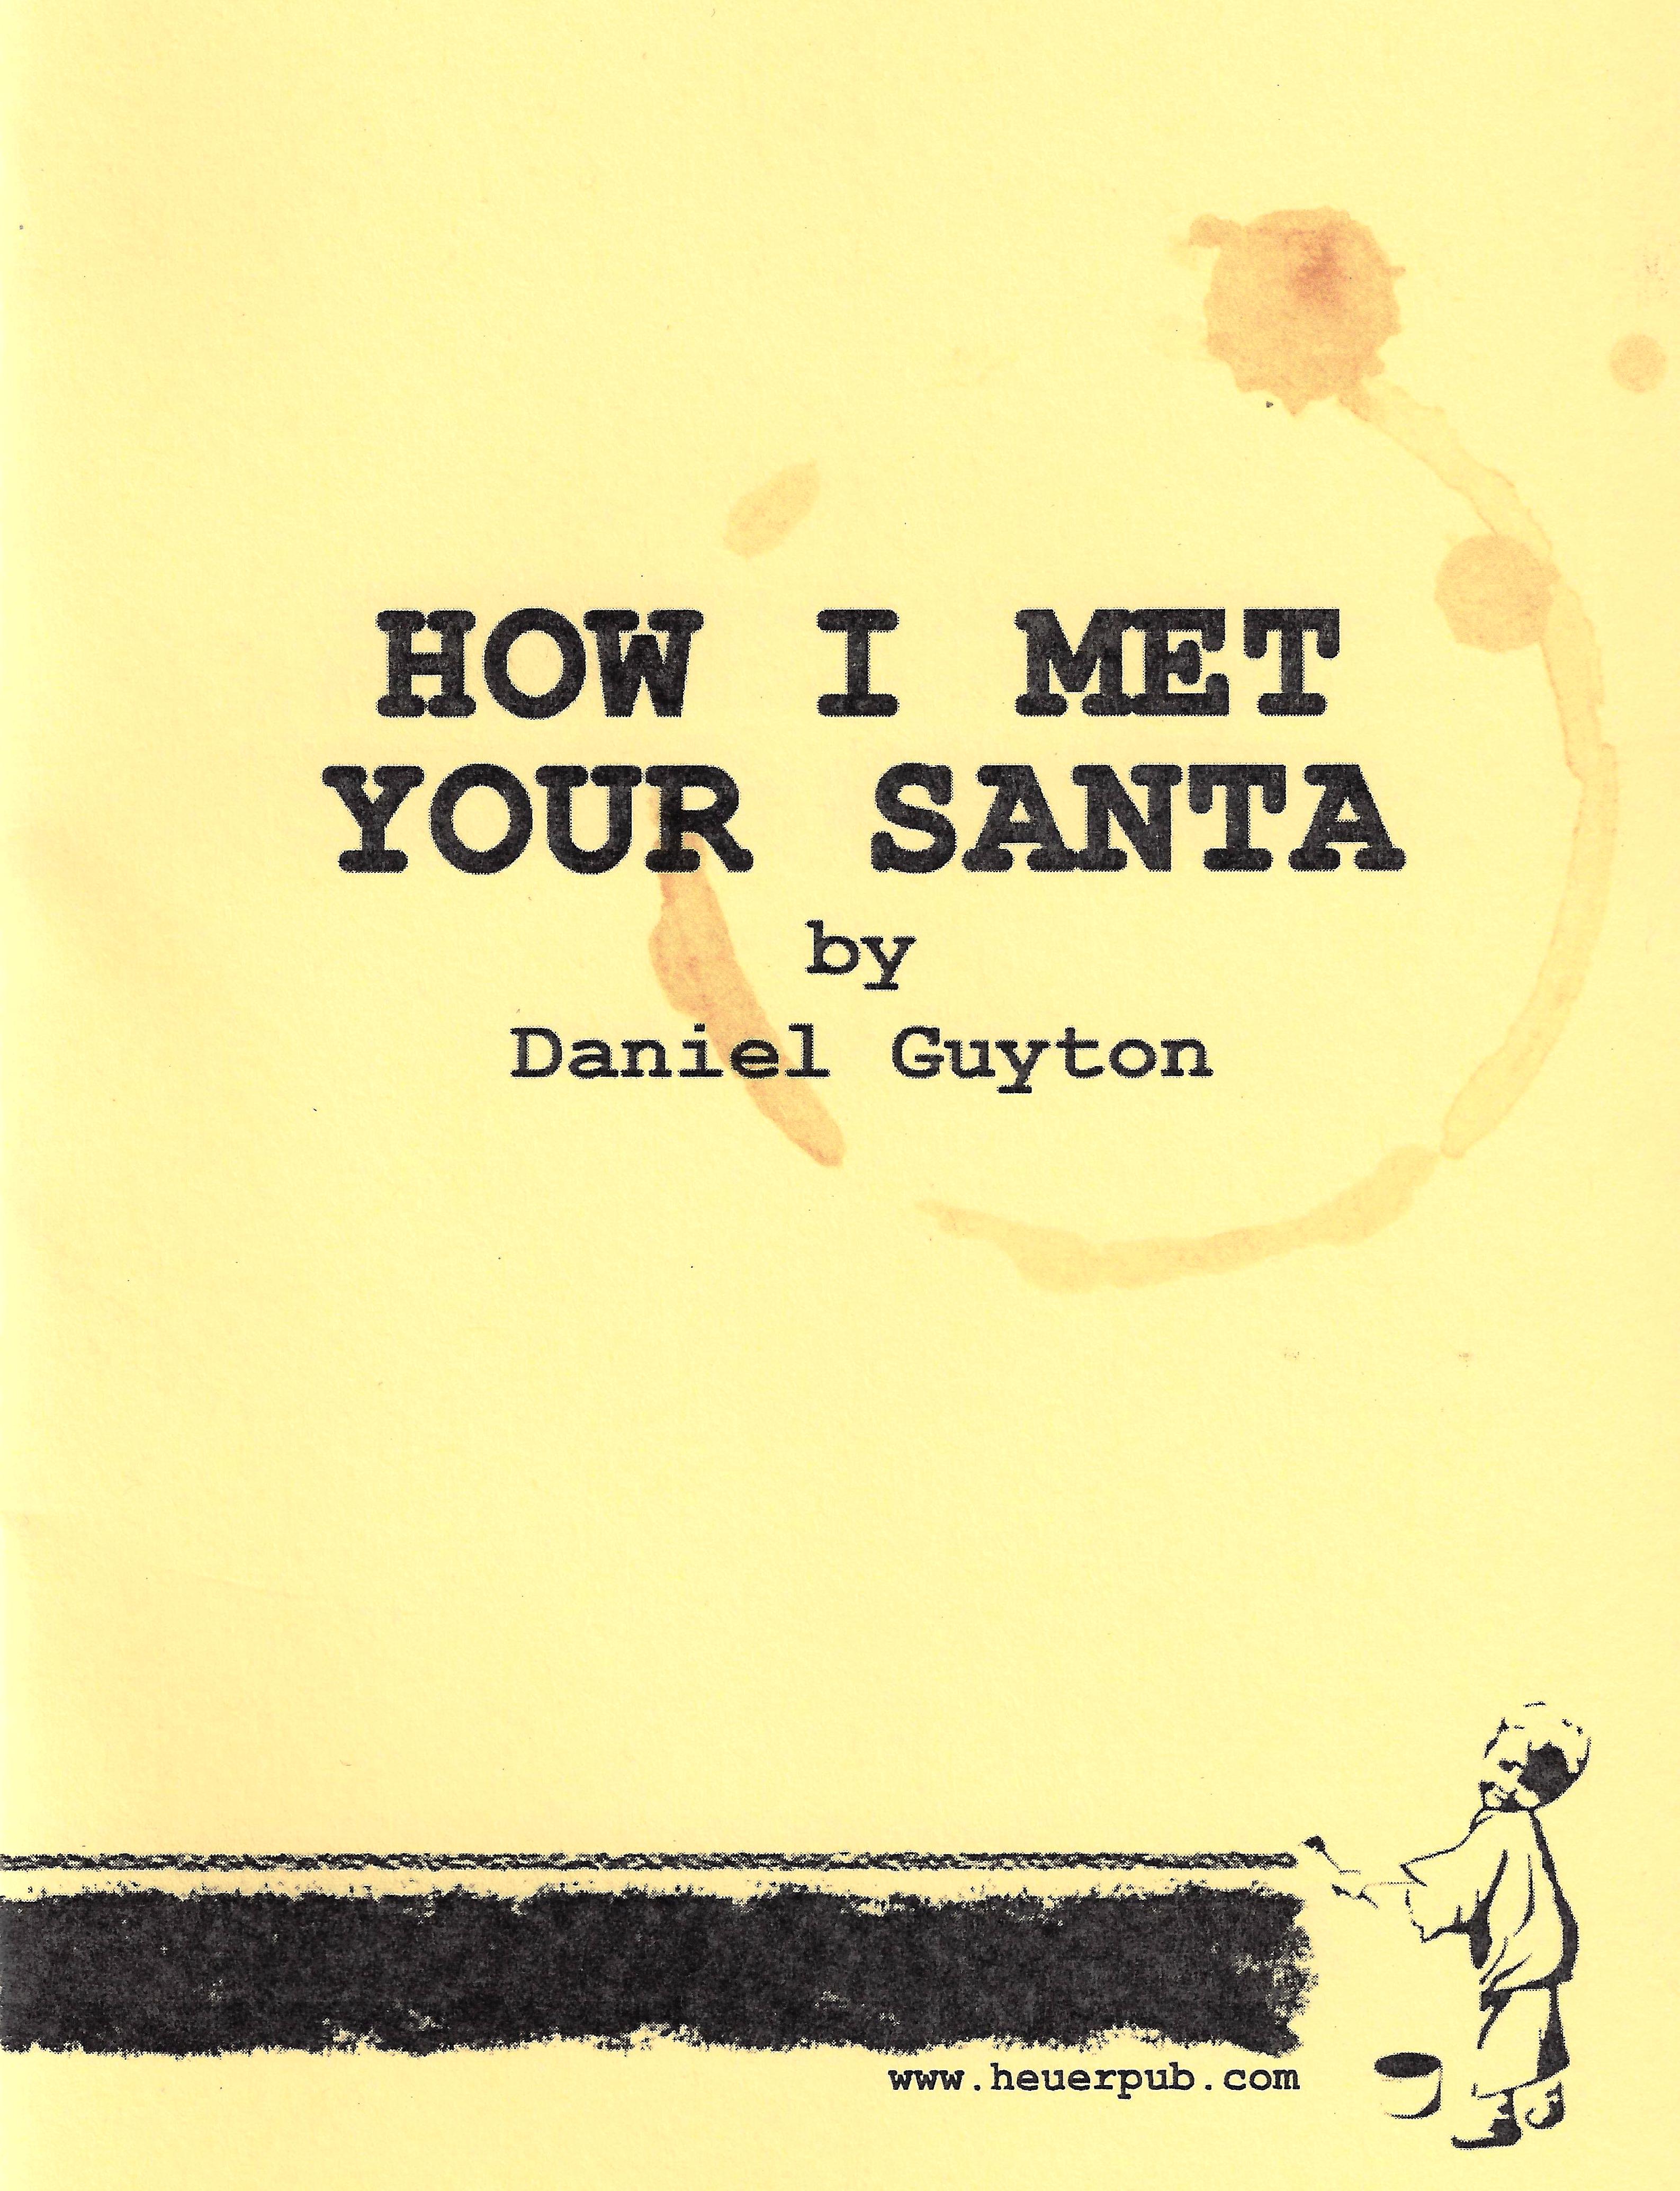 How I Met Your Santa by Daniel Guyton